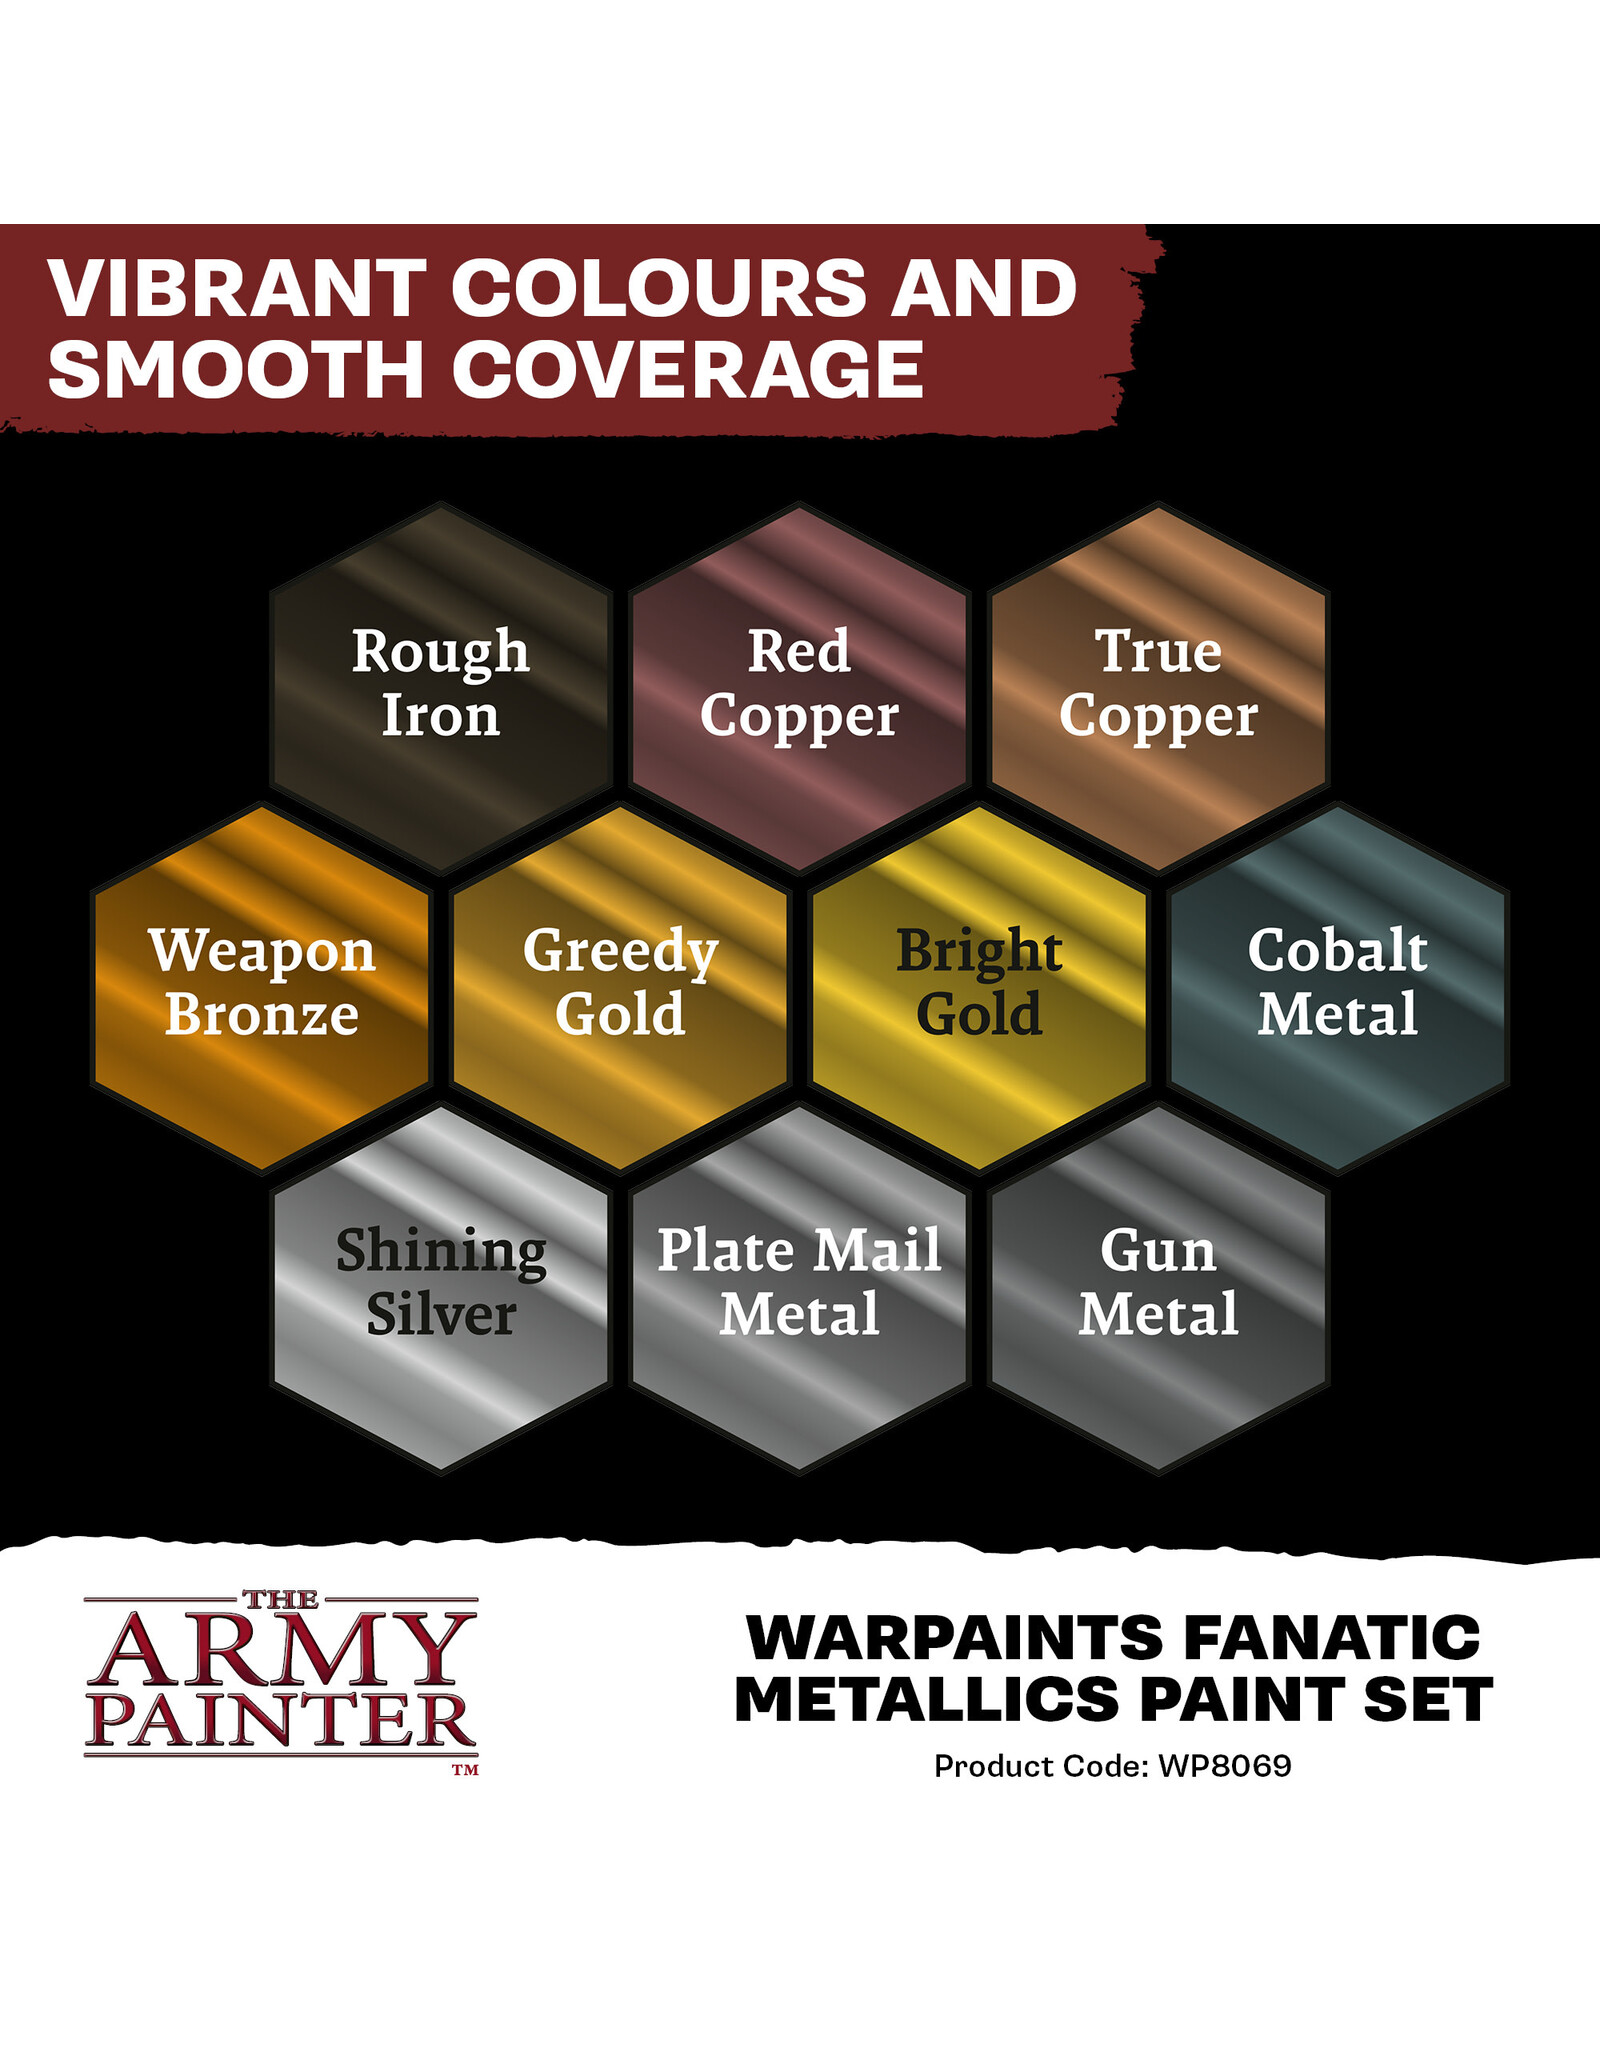 The Army Painter The Army Painter Warpaints Fanatic Metallics Paint Set